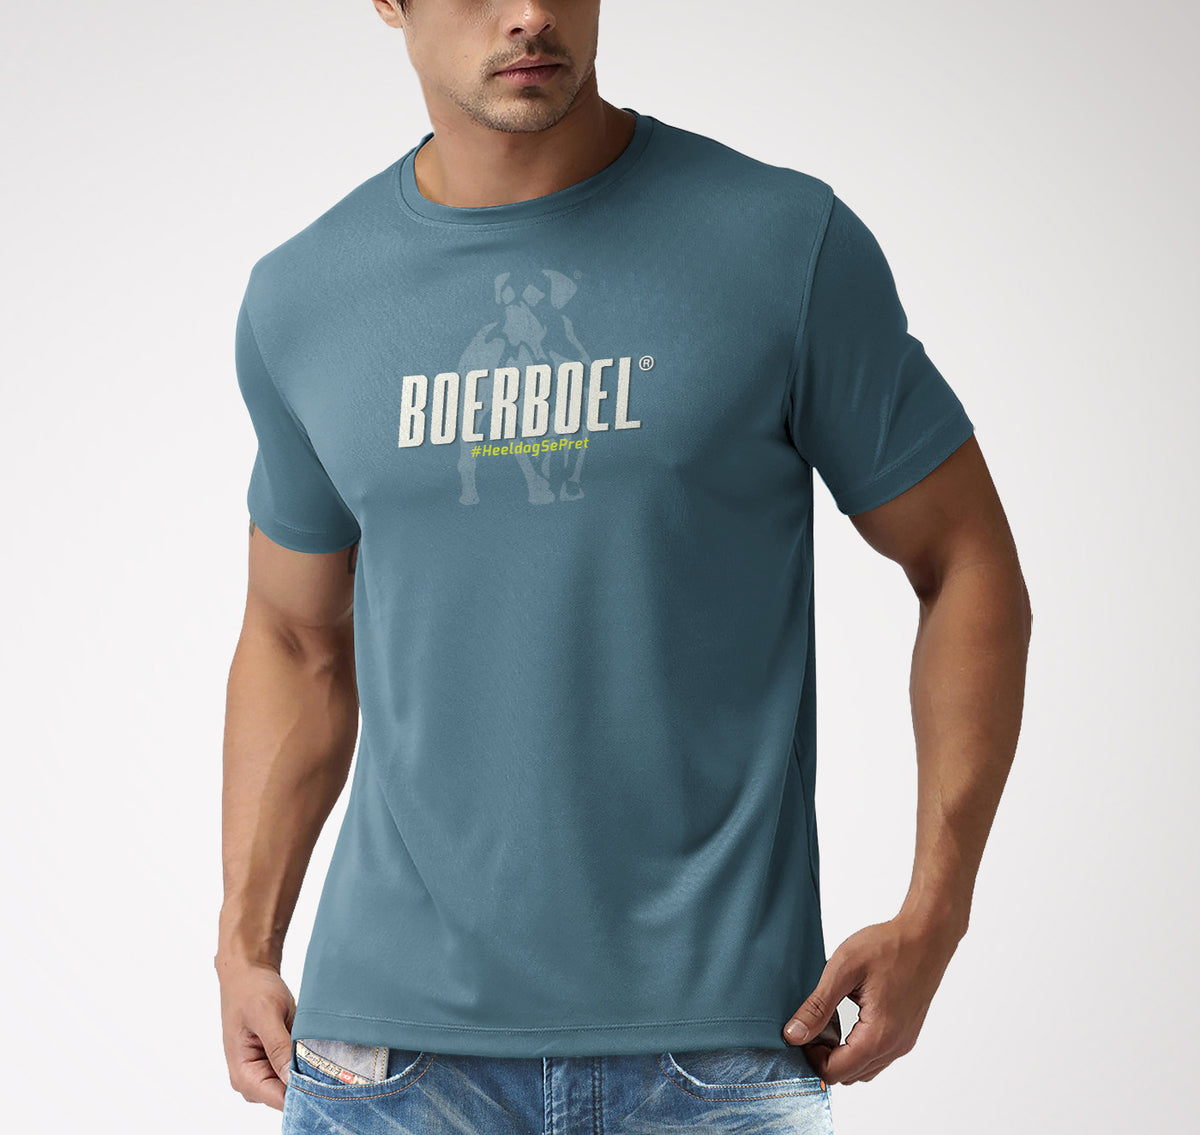 Boerboel Mtsapa Permium T-Shirt (Ap) Air Force Blue